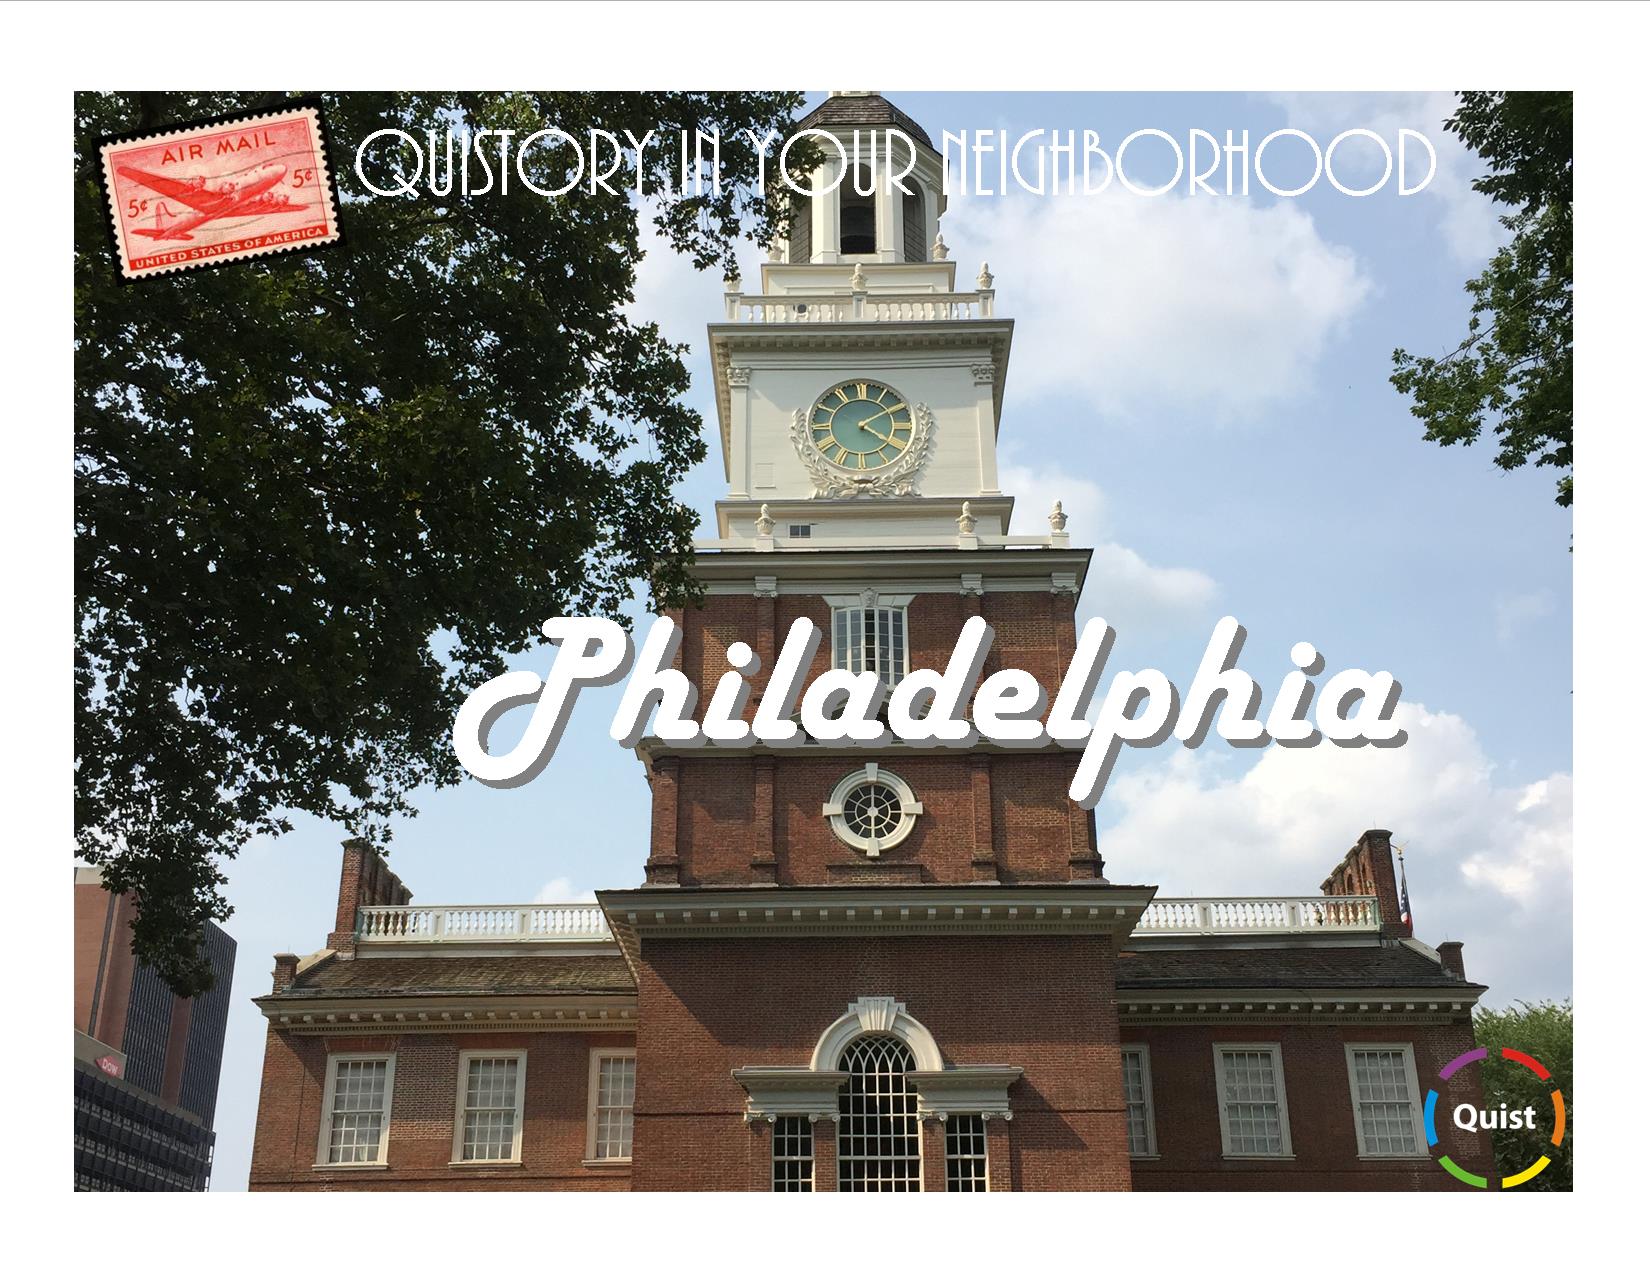 Quistory in your Neighborhood Images for Philadelphia